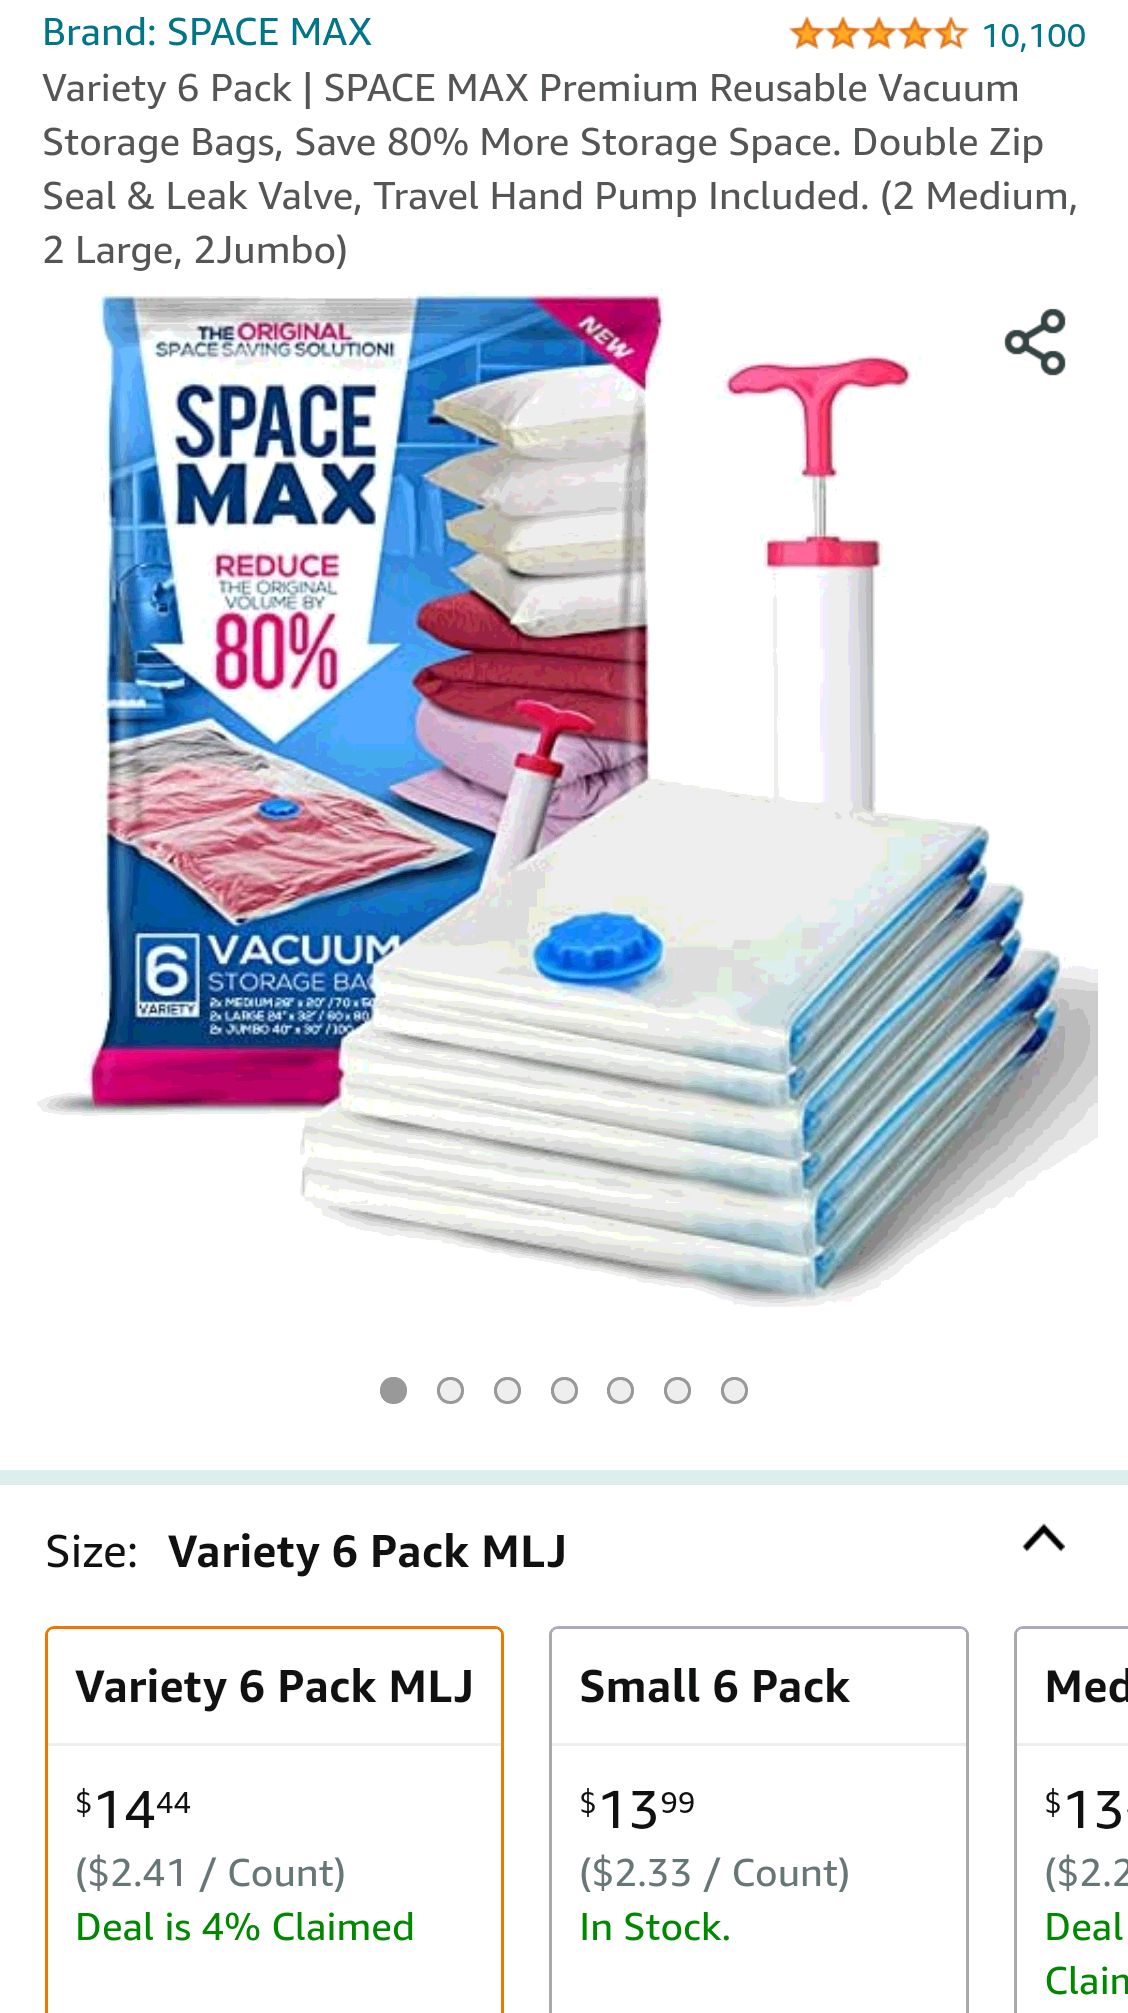 Variety 6 Pack | SPACE MAX Premium Reusable Vacuum Storage Bags, Save 80% More Storage Space. Double Zip Seal & Leak Valve, Travel Hand Pump Included. (2 Medium, 2 Large, 2Jumbo) 真空收纳袋